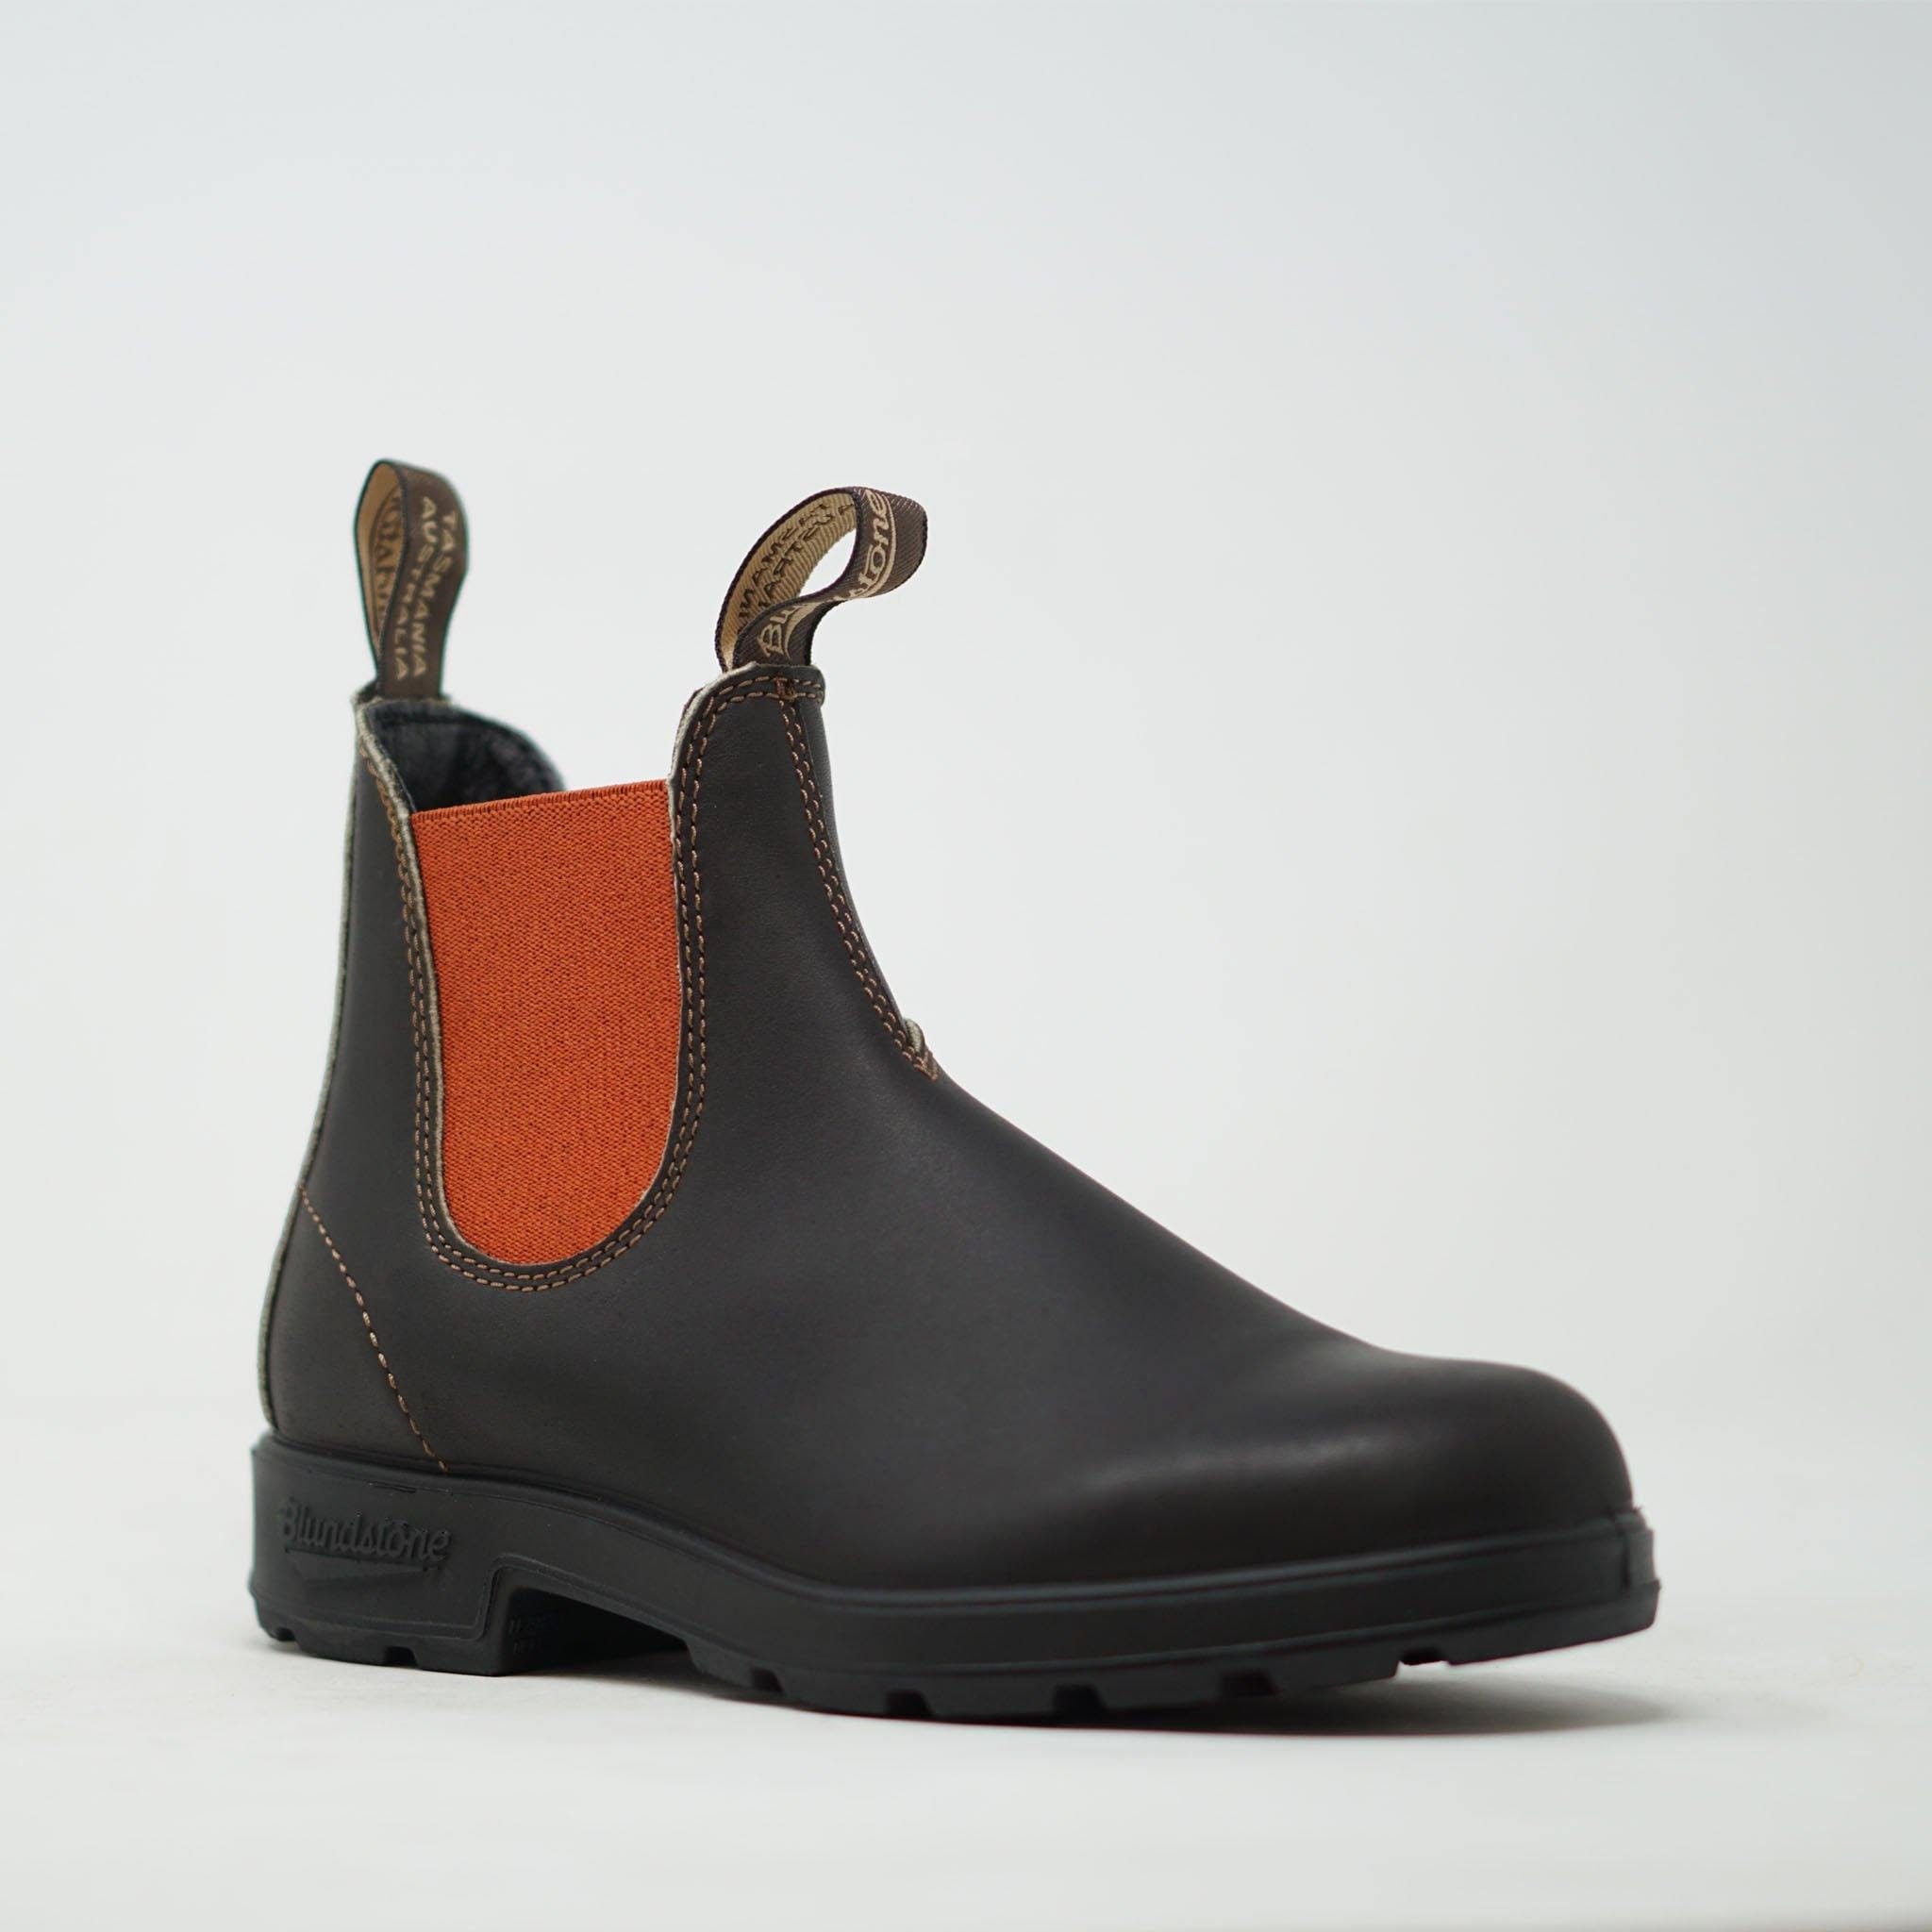 Blundstone 1918 Original Stout Boot - Brown/Terracotta BOOTS  - ZIGZAG Footwear